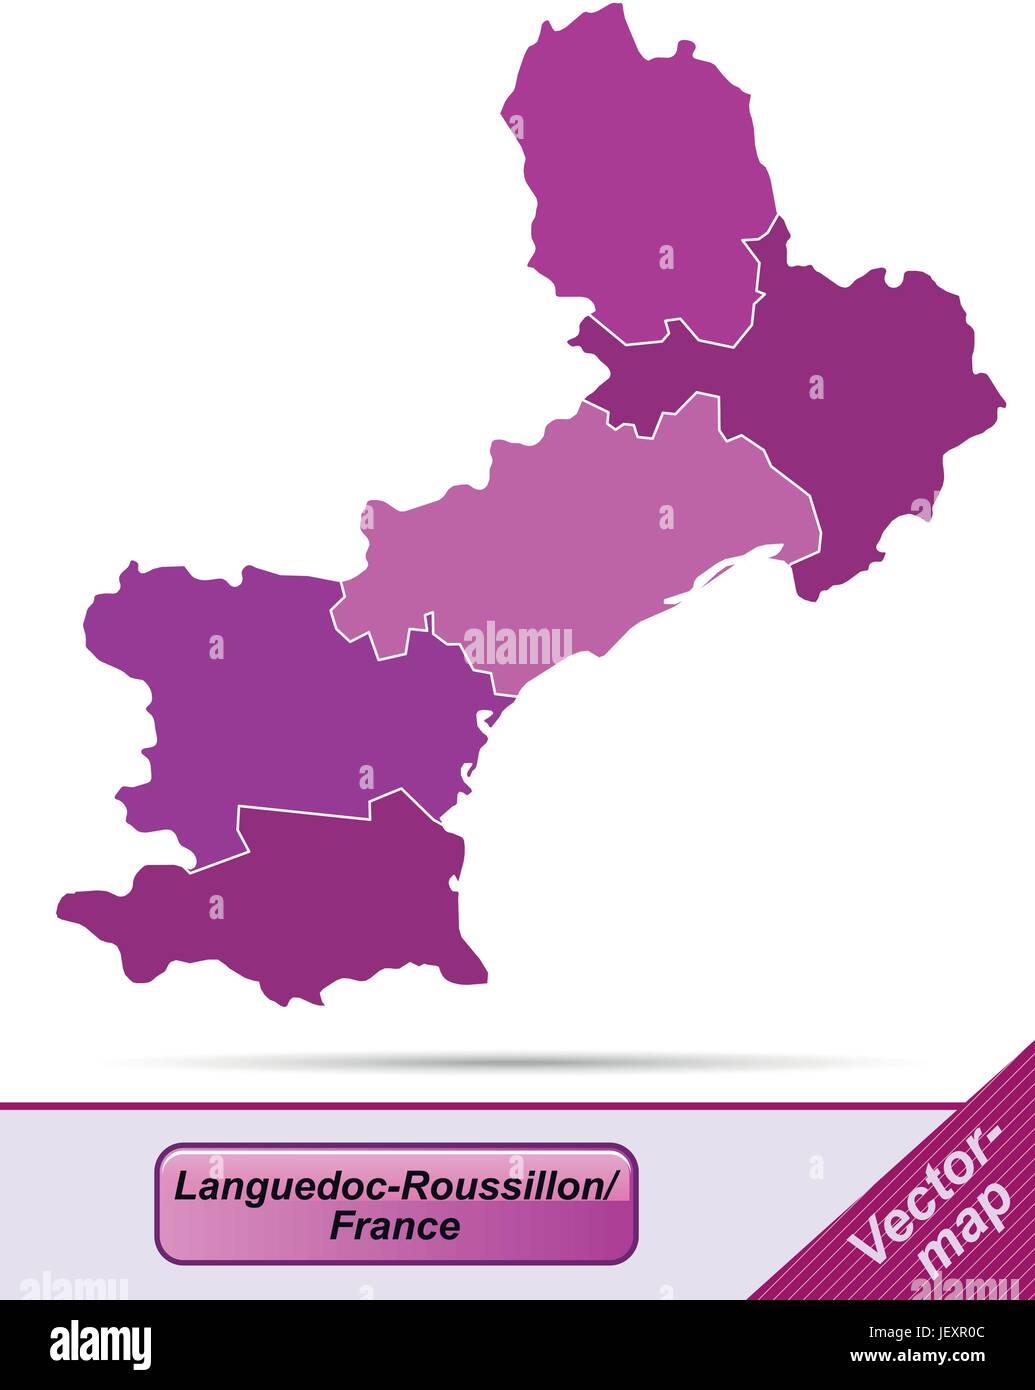 Grenzkarte des languedoc-roussillon mit Begrenzungen in Violett Stock Vektor